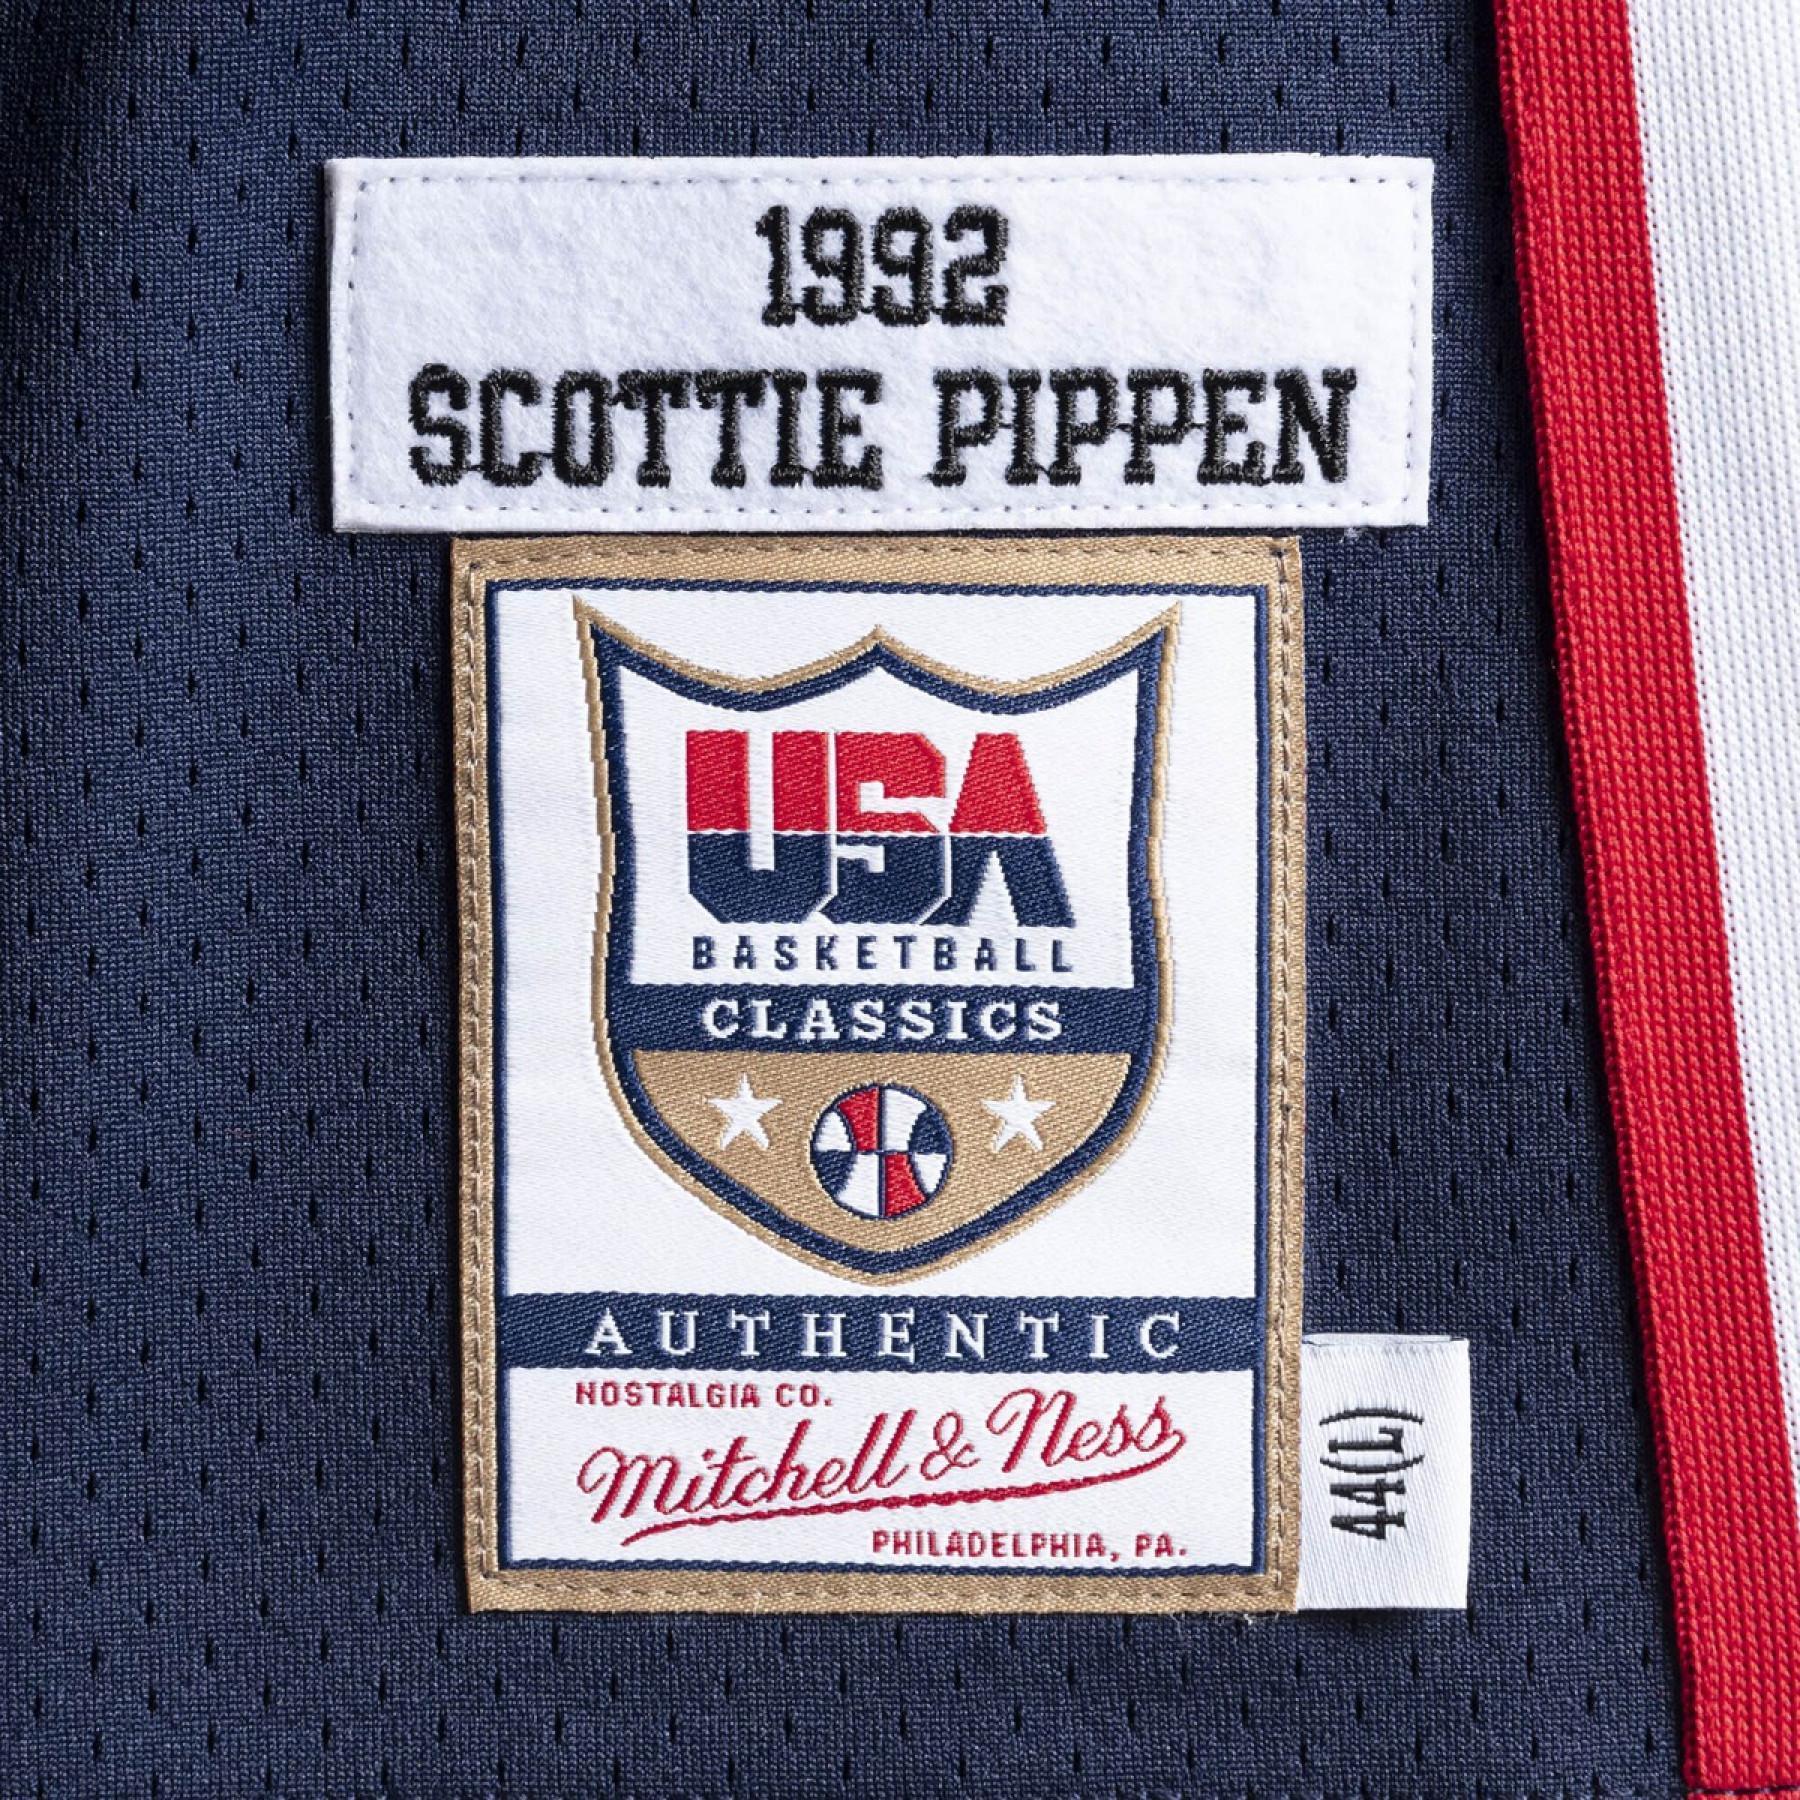 Camiseta auténtica del equipo USA nba Scottie Pippen